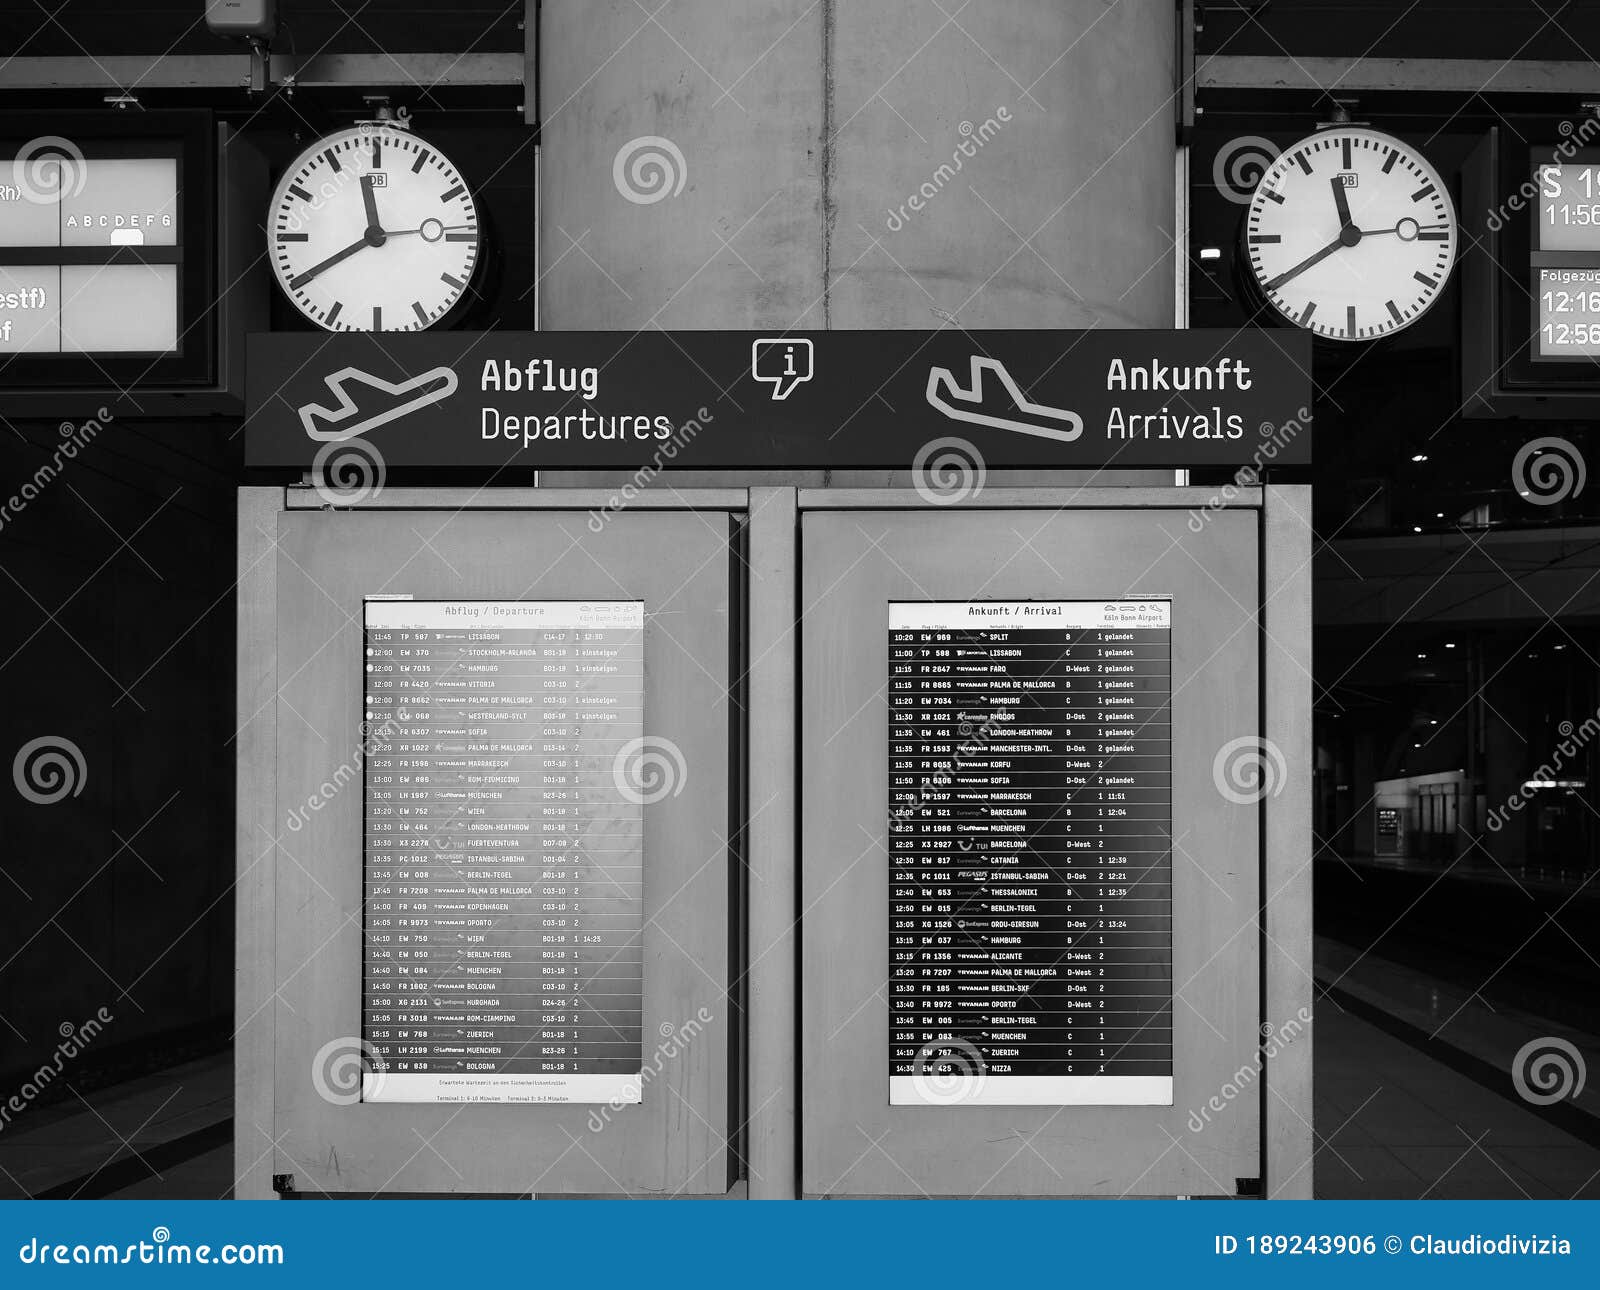 abflug (departures) and ankunft (arrivals) time table screens at